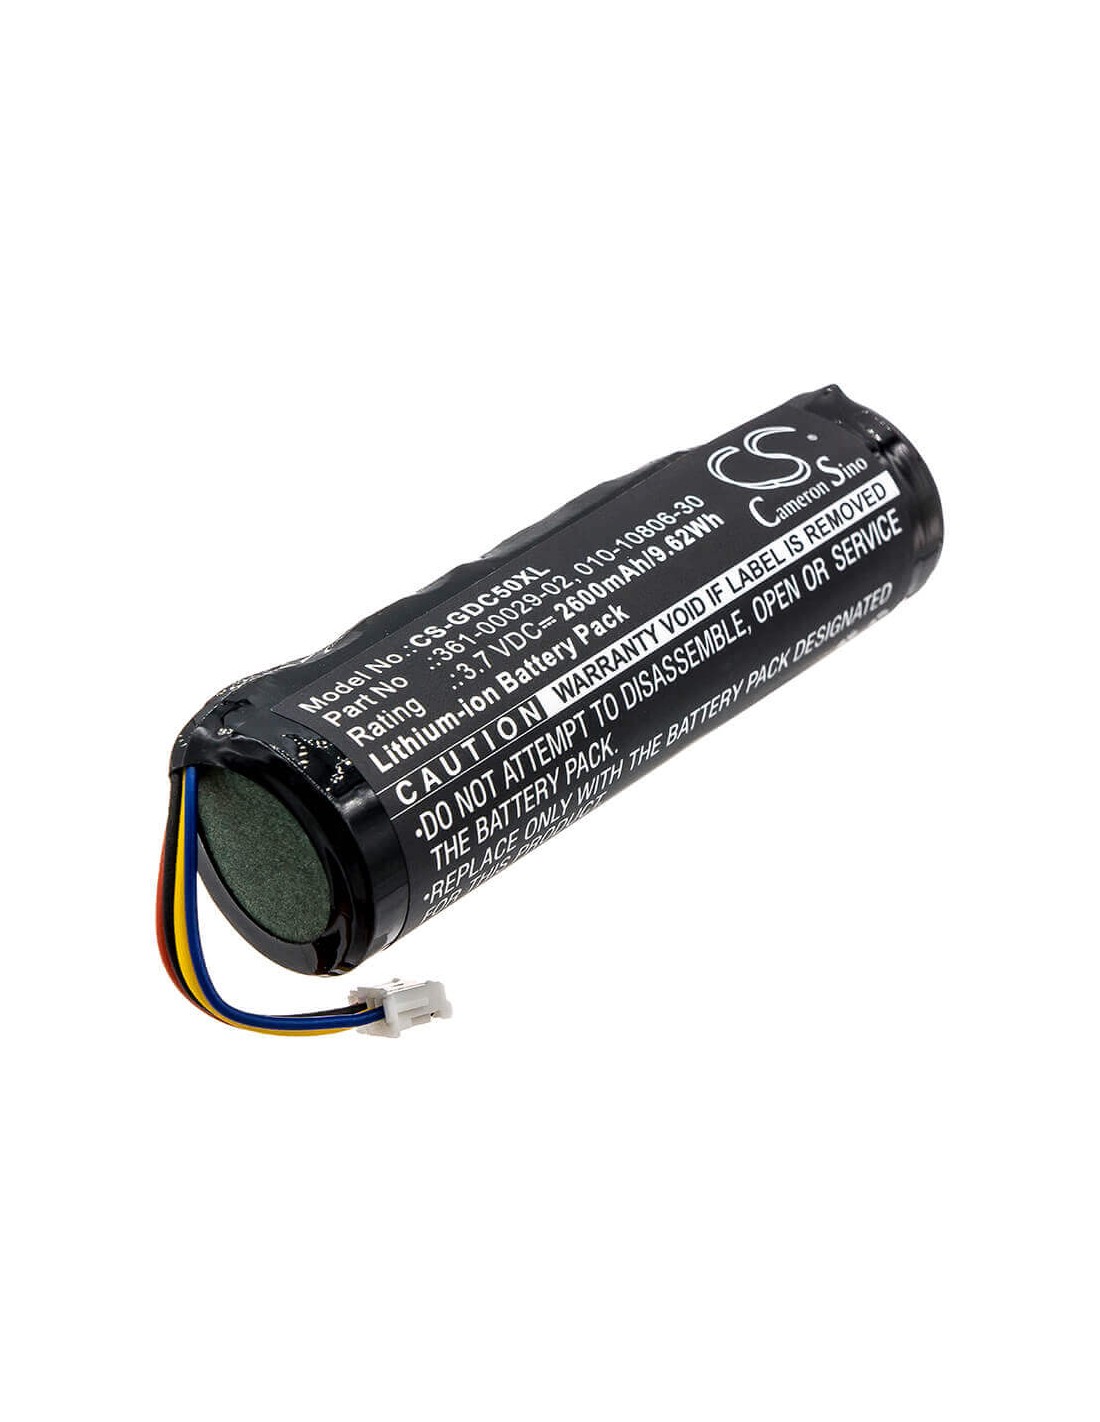 Battery for Garmin Dc50, Dc50 Dog Tracking Collar, Alpha 3.7V, 2600mAh - 9.62Wh